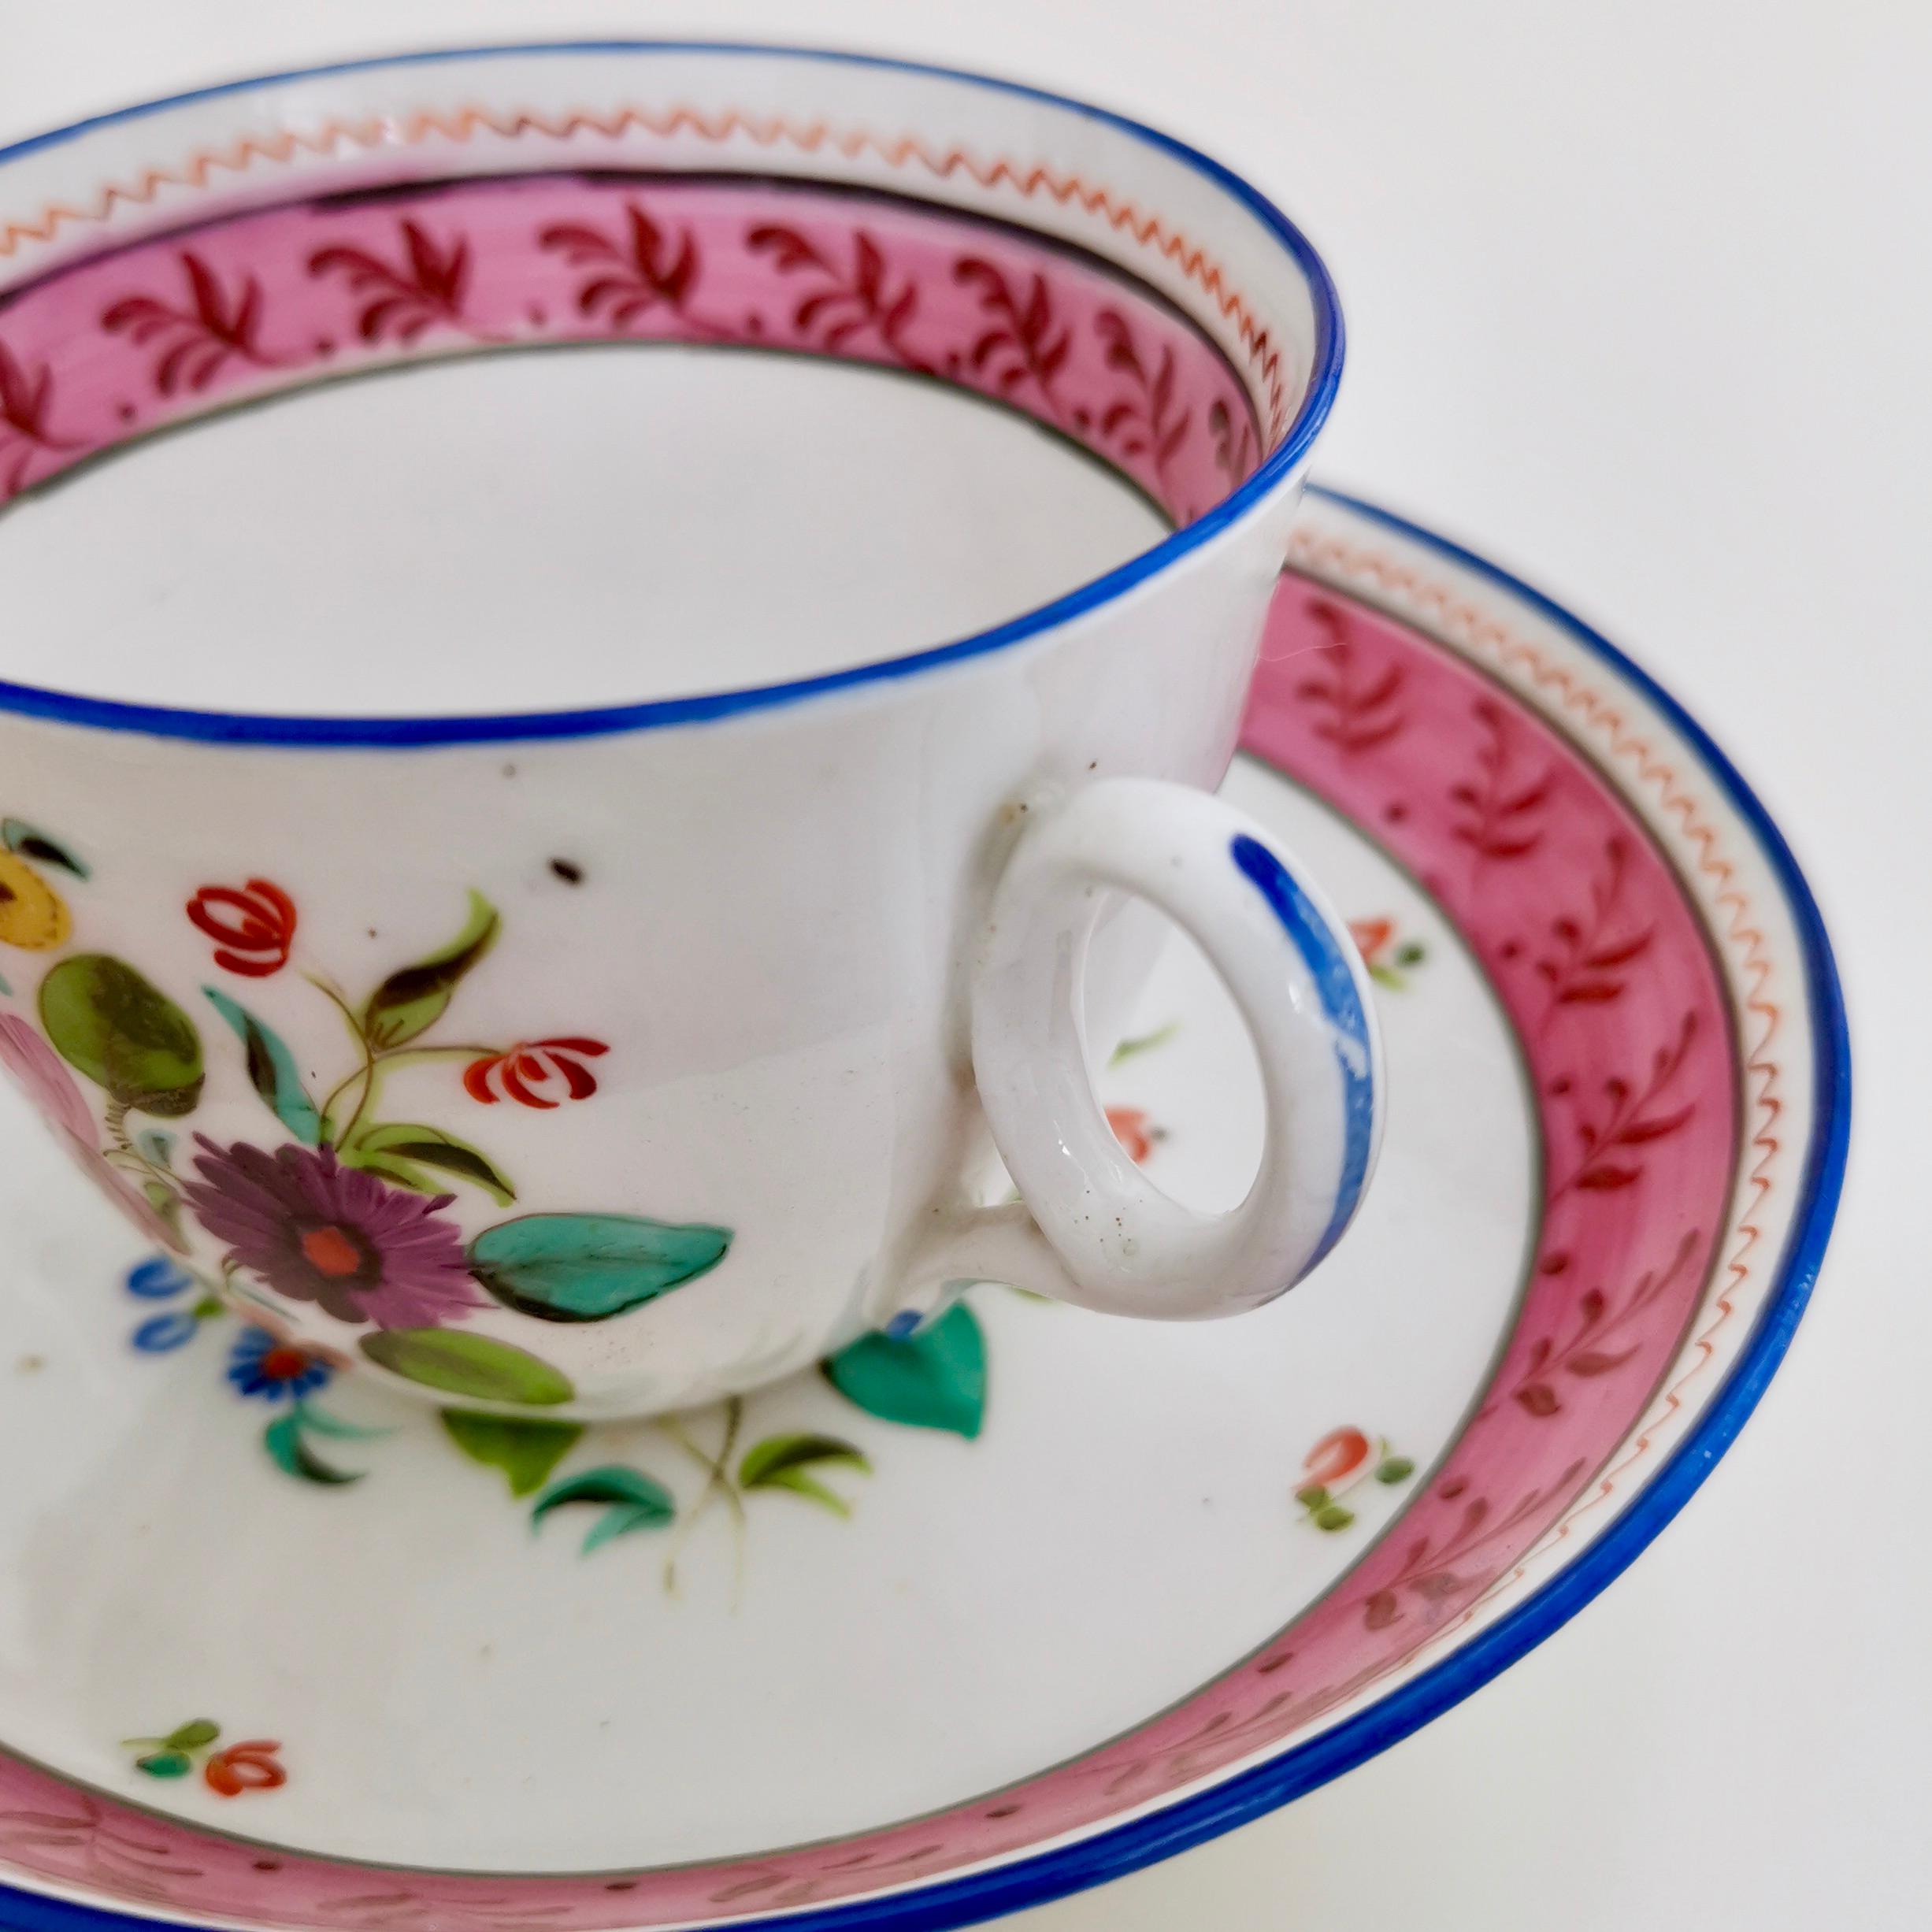 New Hall Porcelain Teacup, Hybrid Paste, Flowers Patt, 1180, circa 1815 1